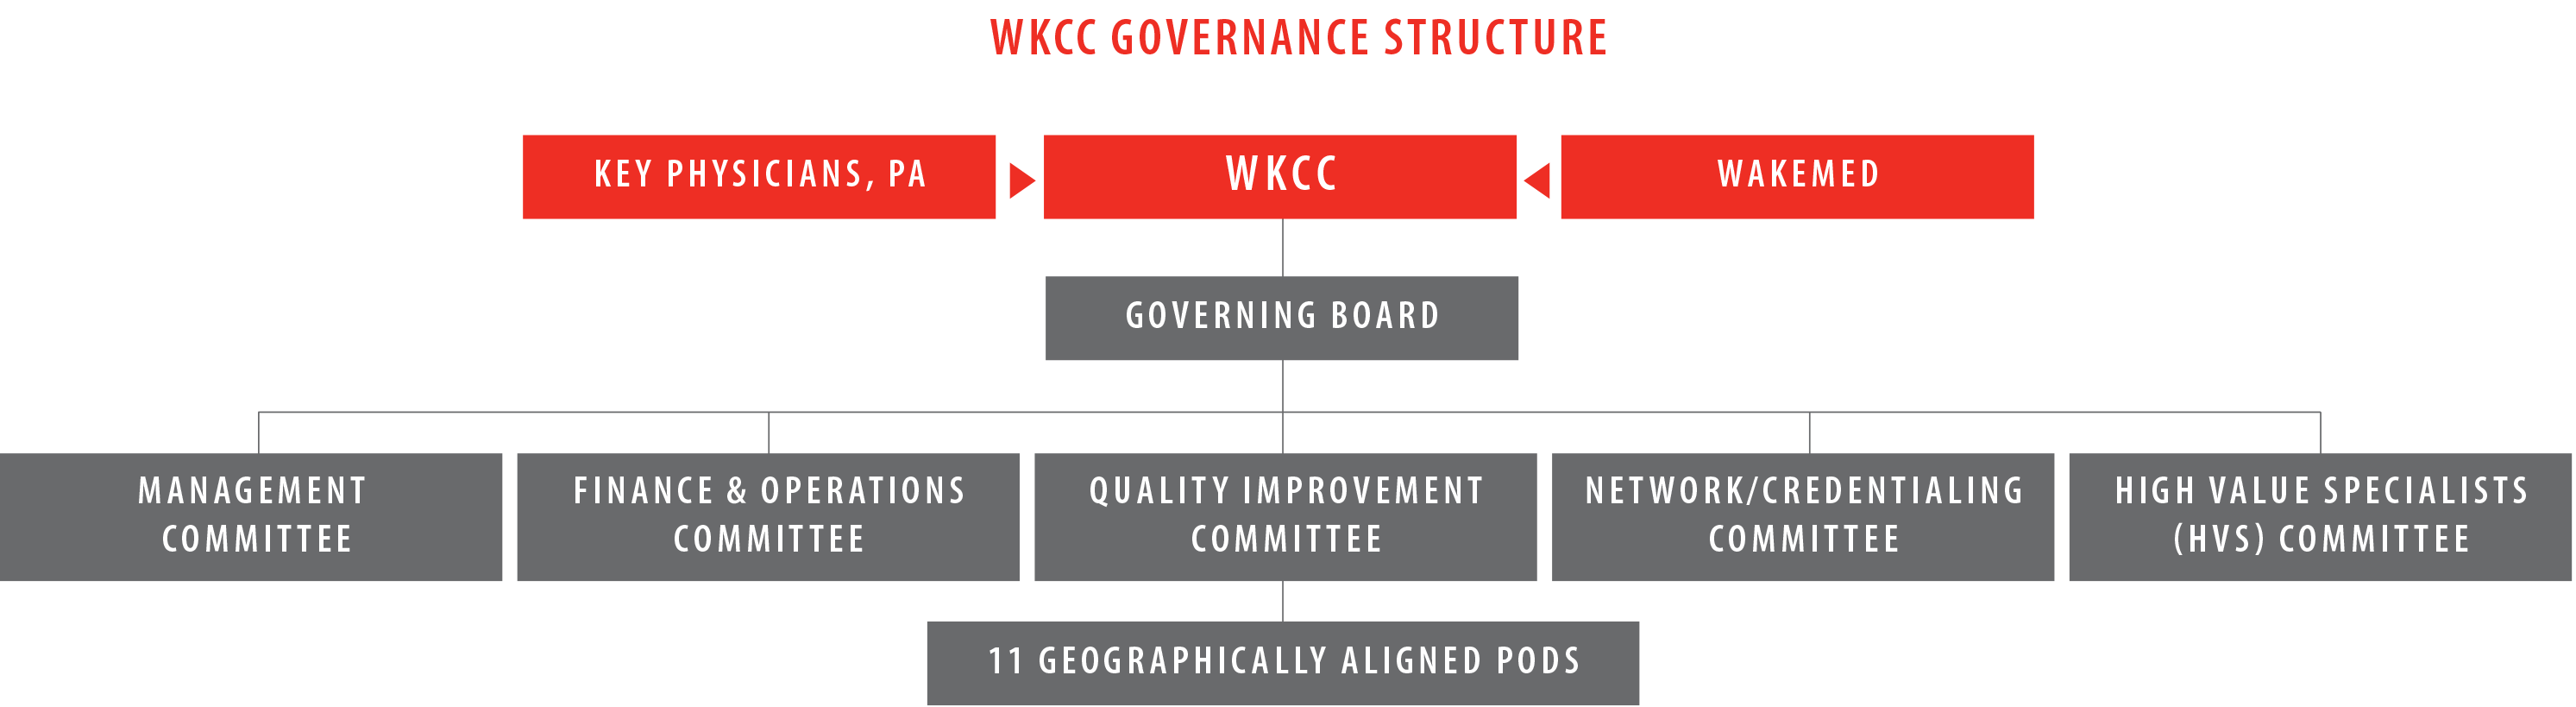 WKCC governance structure chart